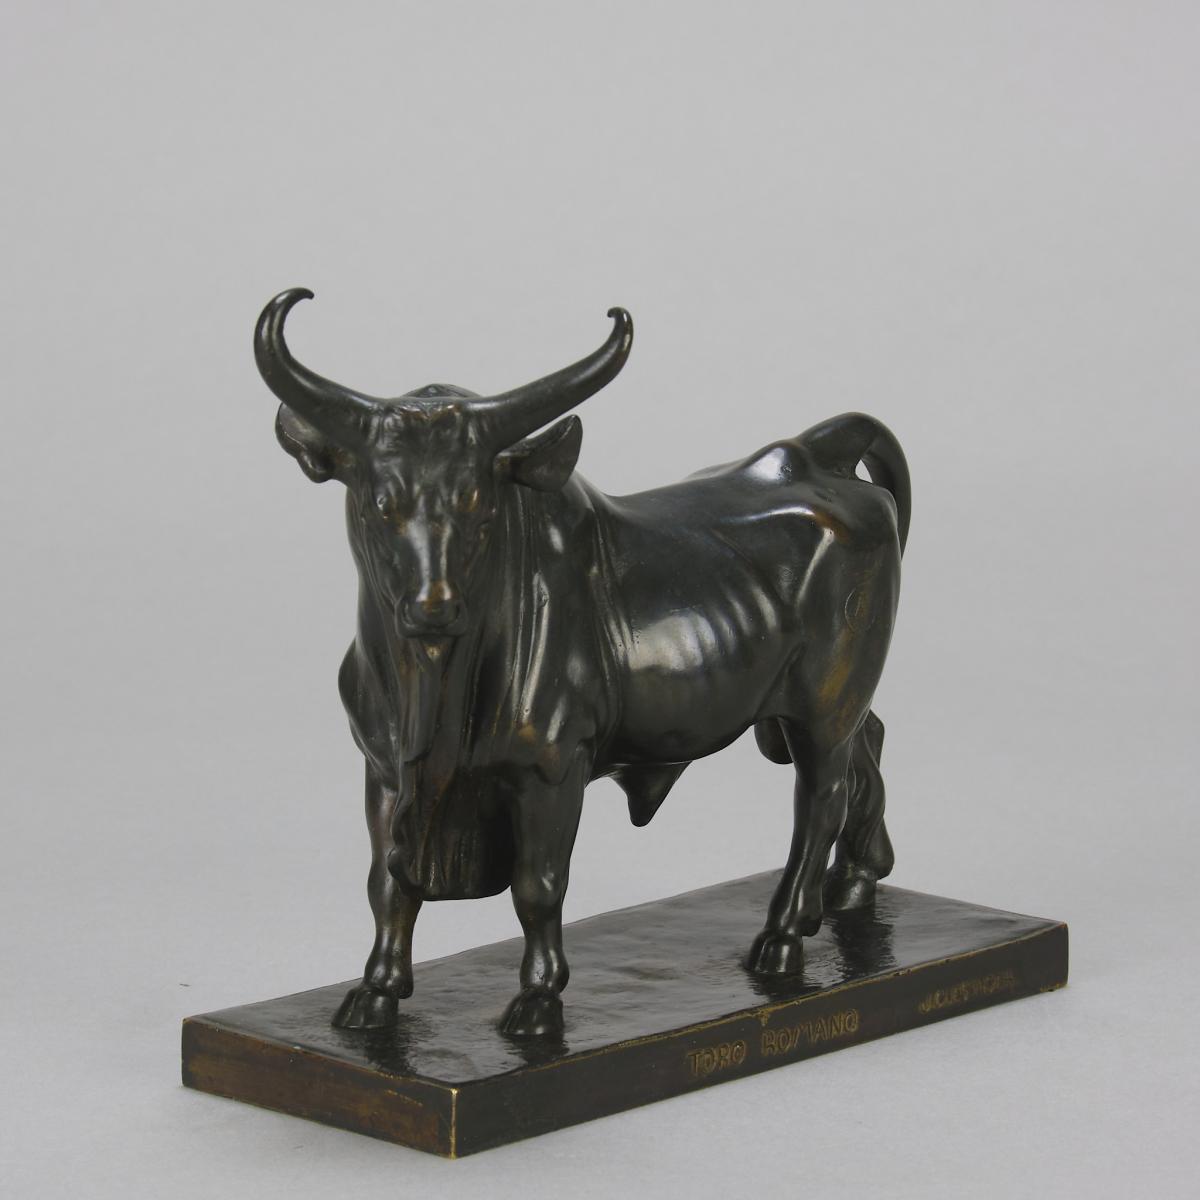 19th Century French Animalier Bronze entitled "Taureau Romano" by Jean-Baptiste Clesinger